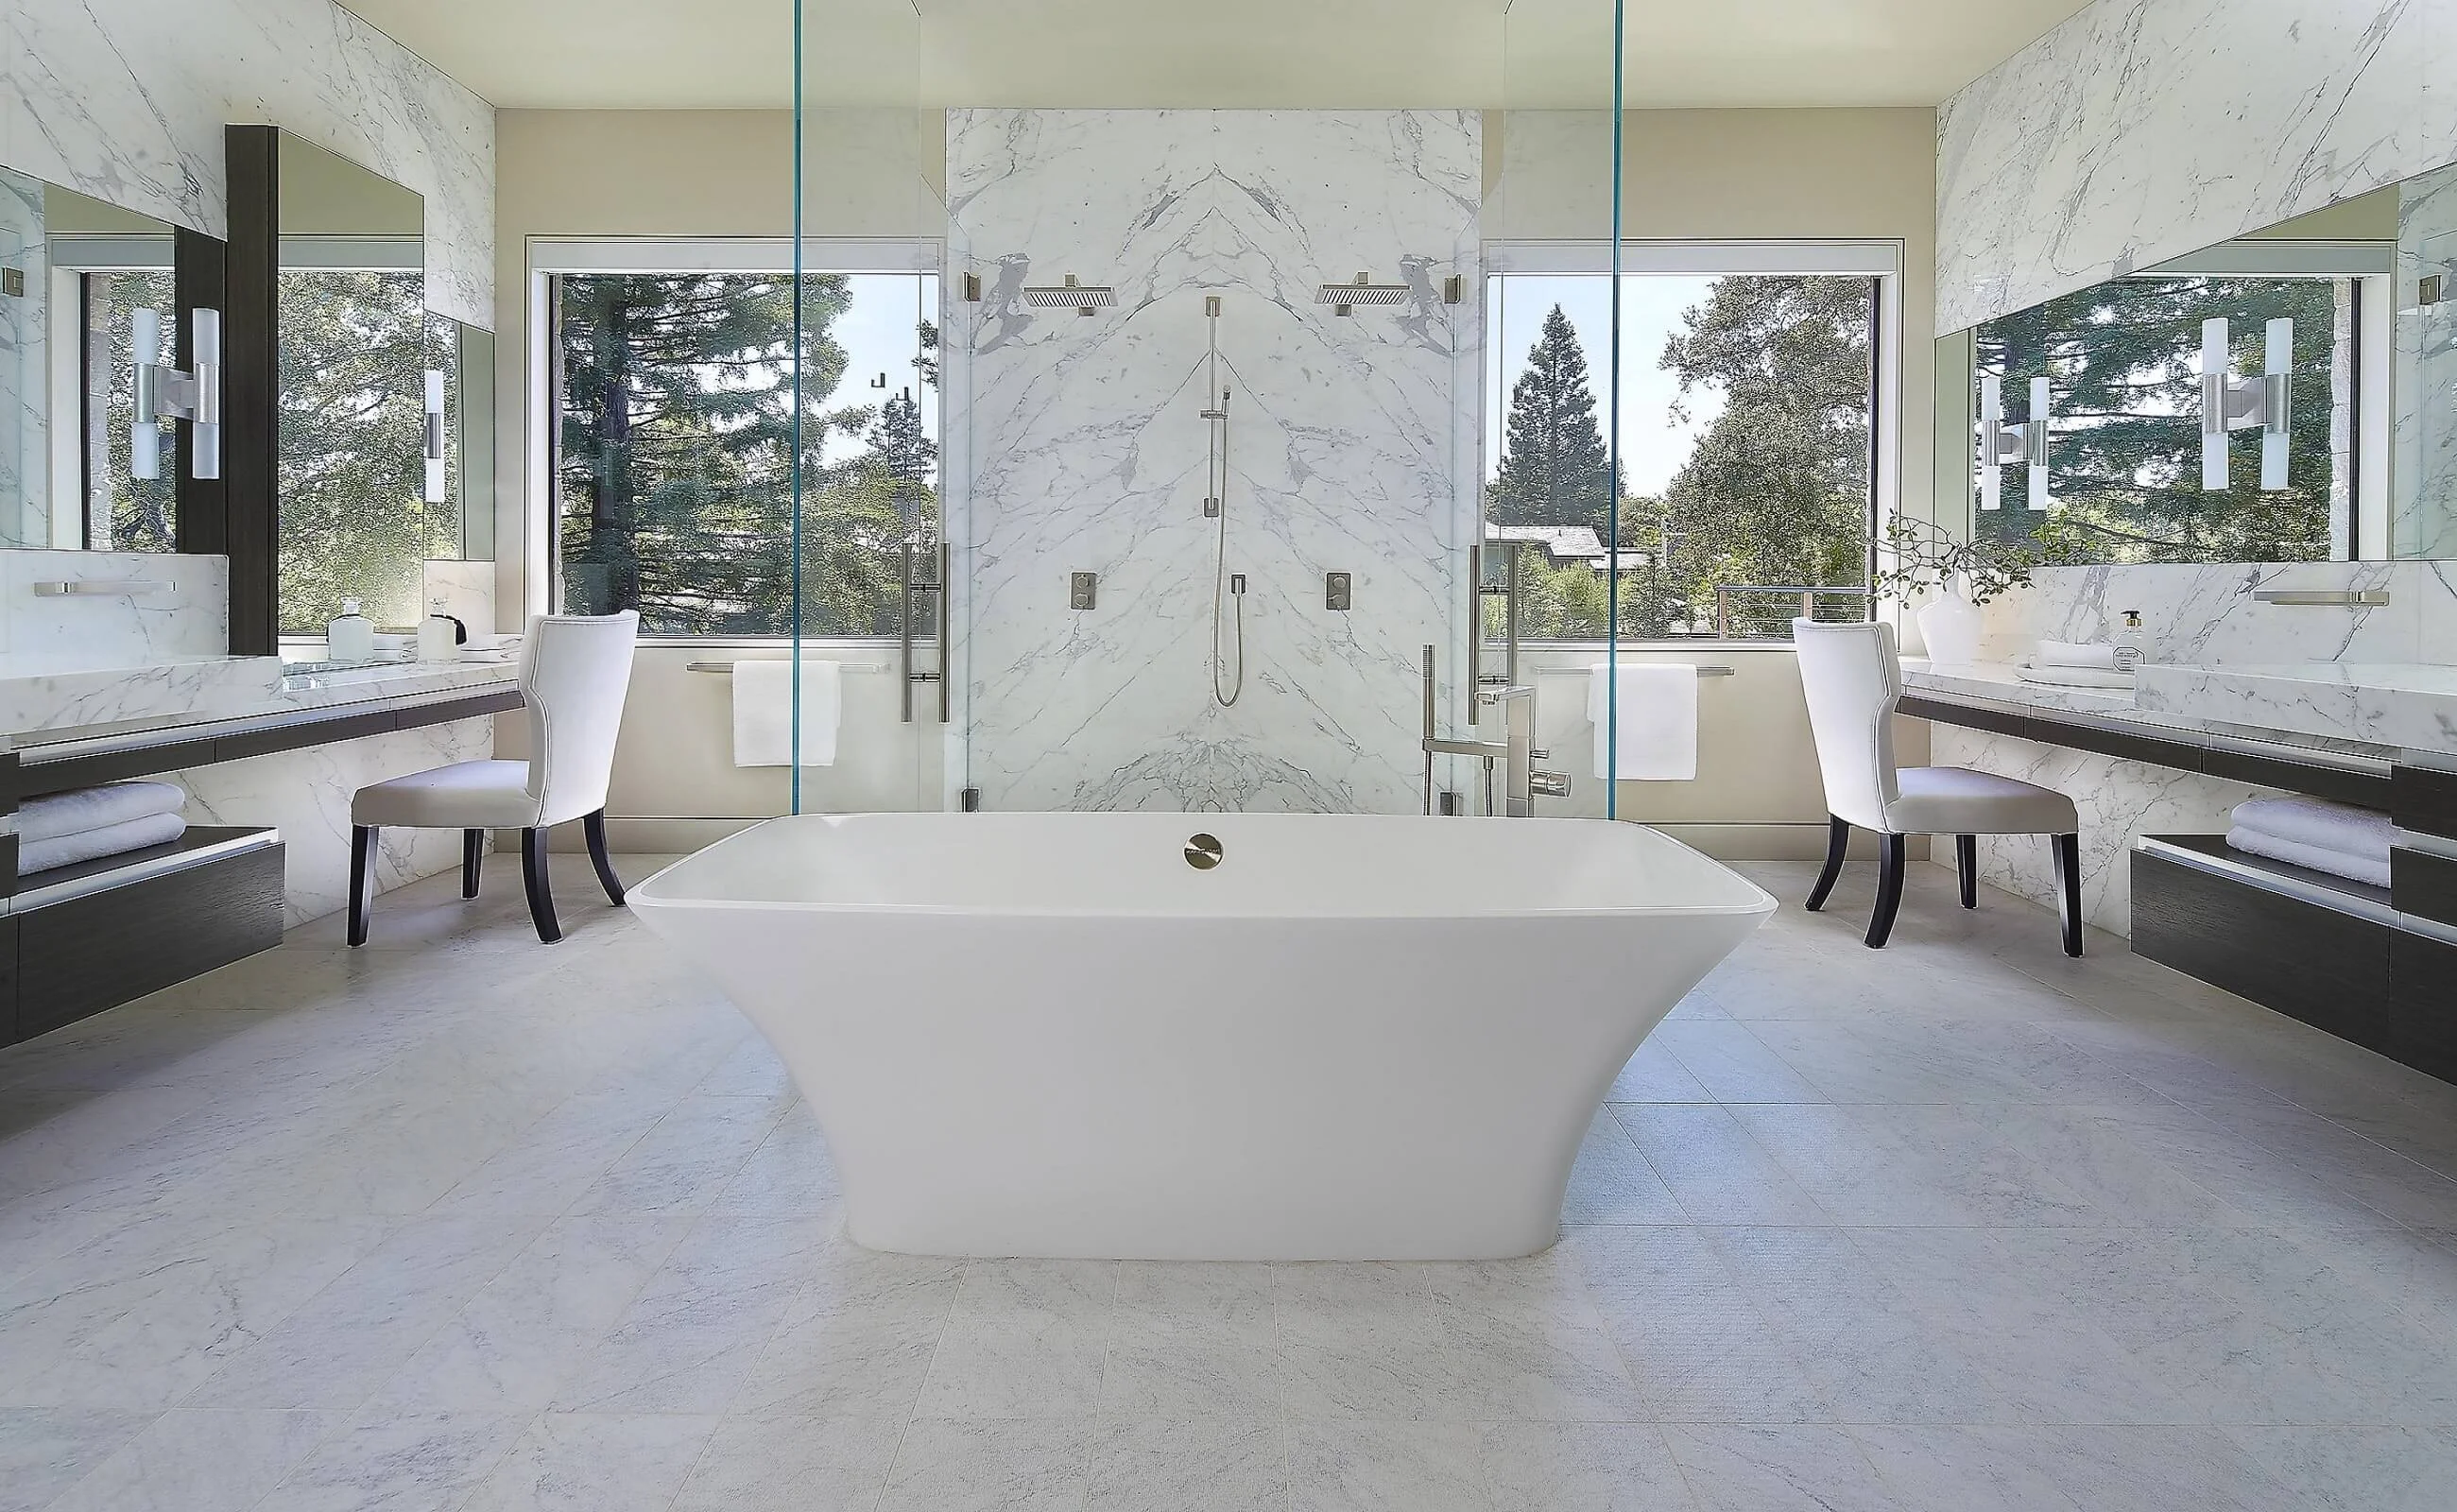 marble bathroom countertops design in nj